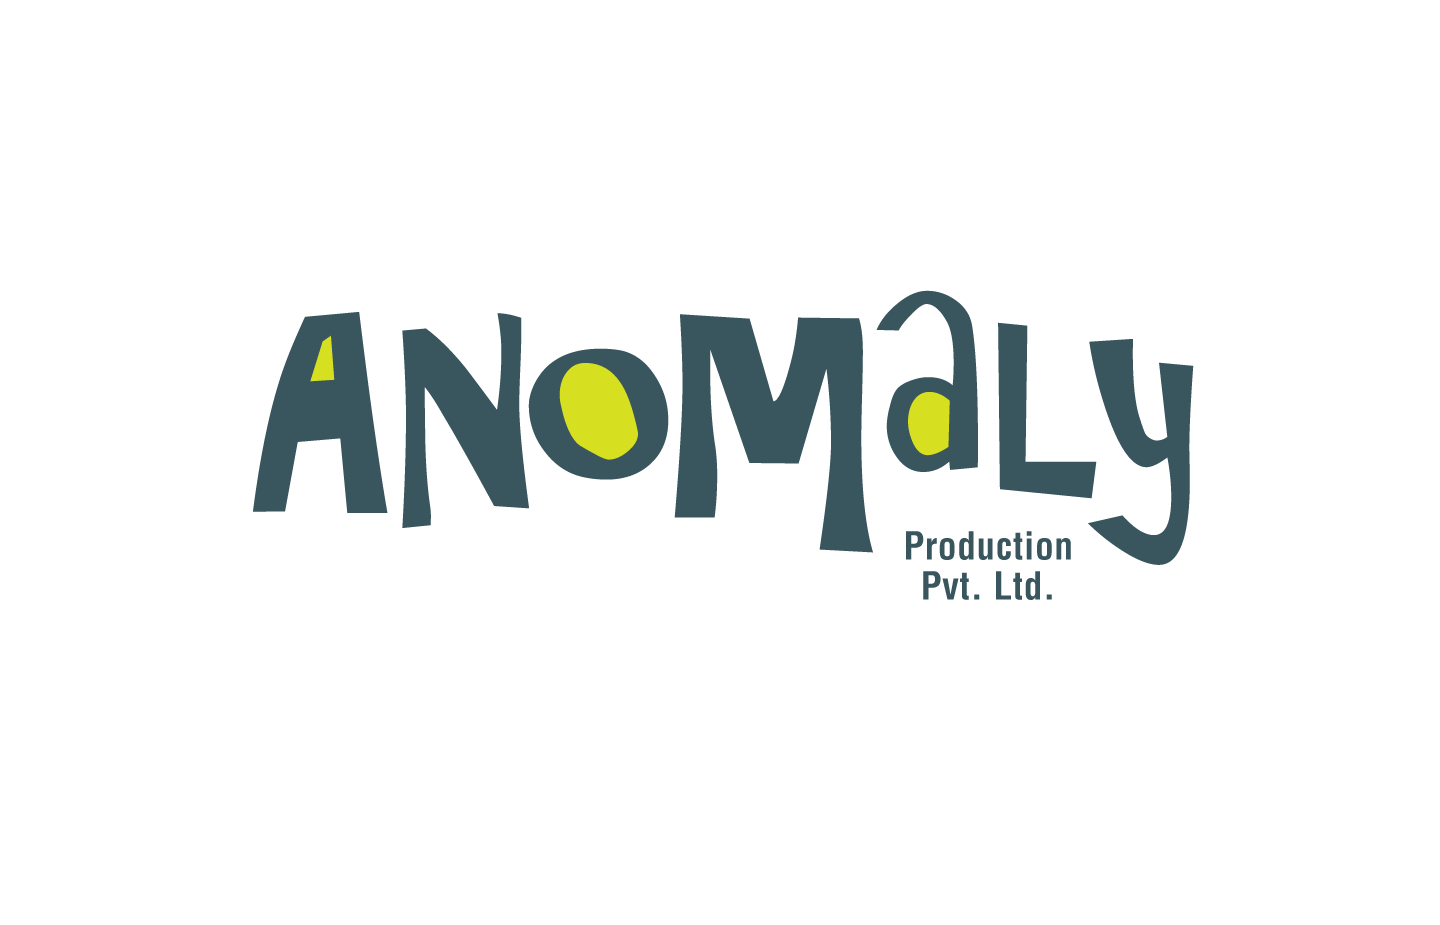 Anomaly Production Pvt Ltd